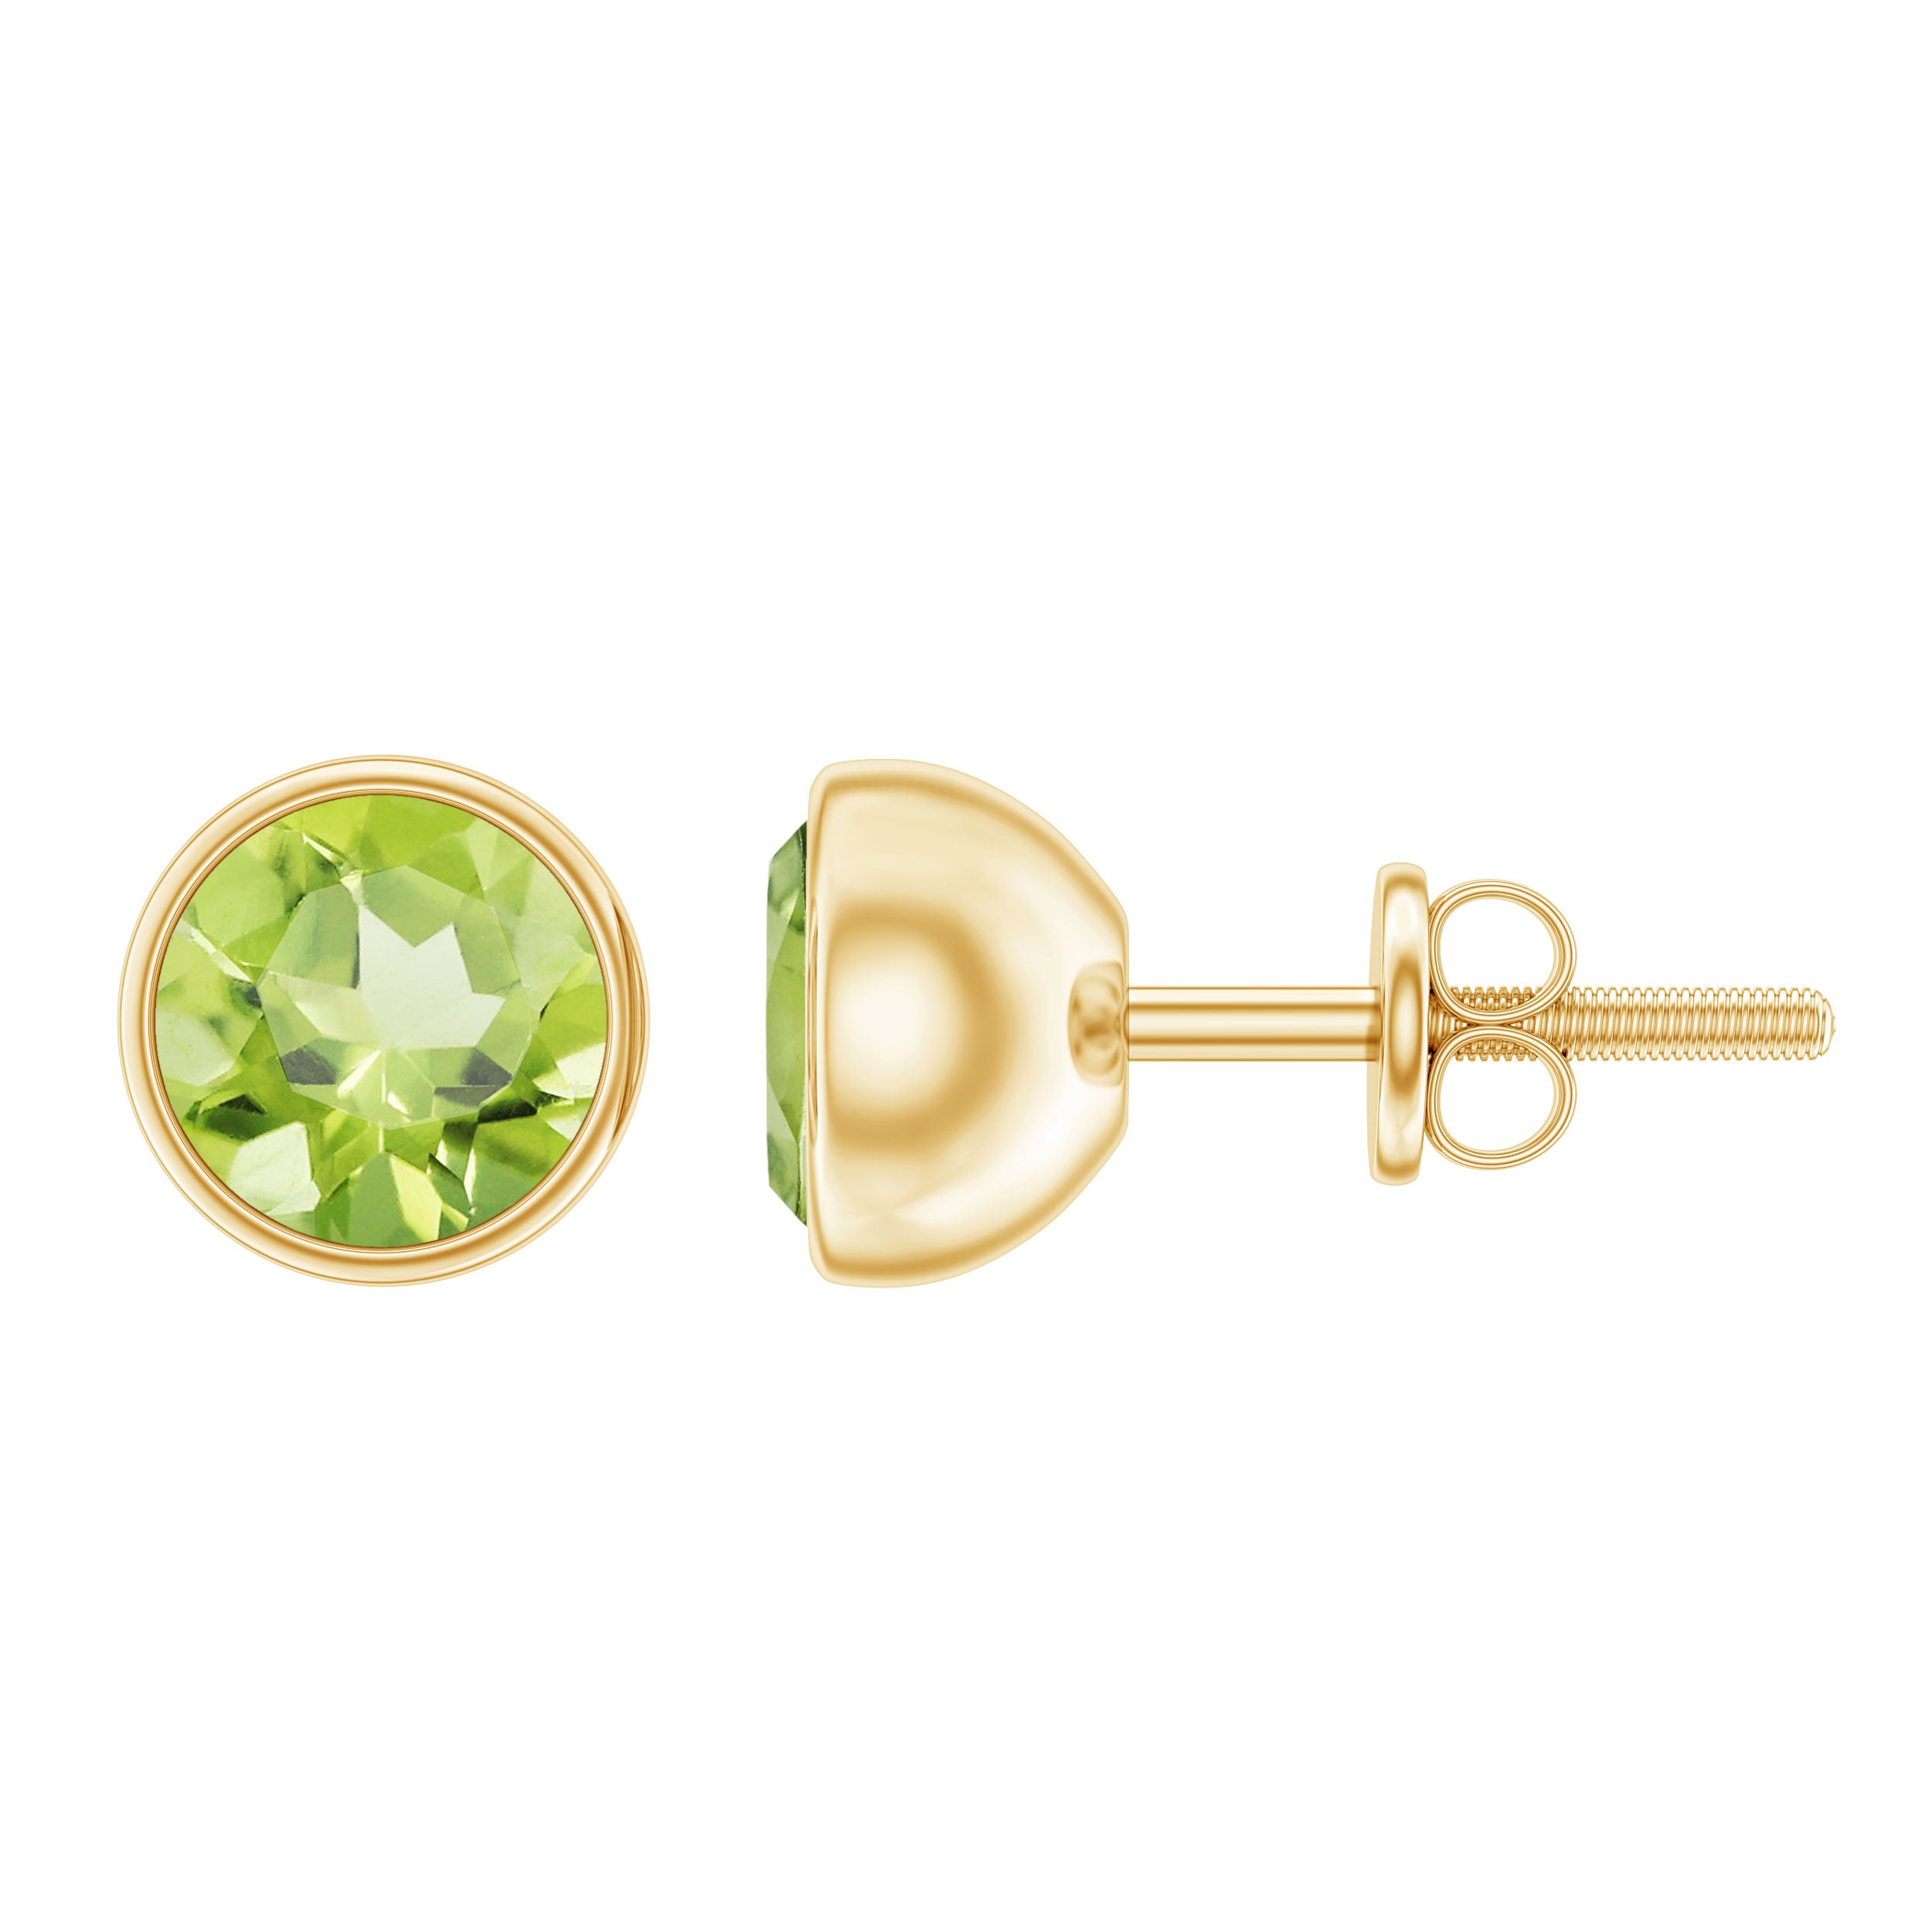 Bezel Set Round Peridot Solitaire Stud Earrings Peridot - ( AAA ) - Quality - Rosec Jewels